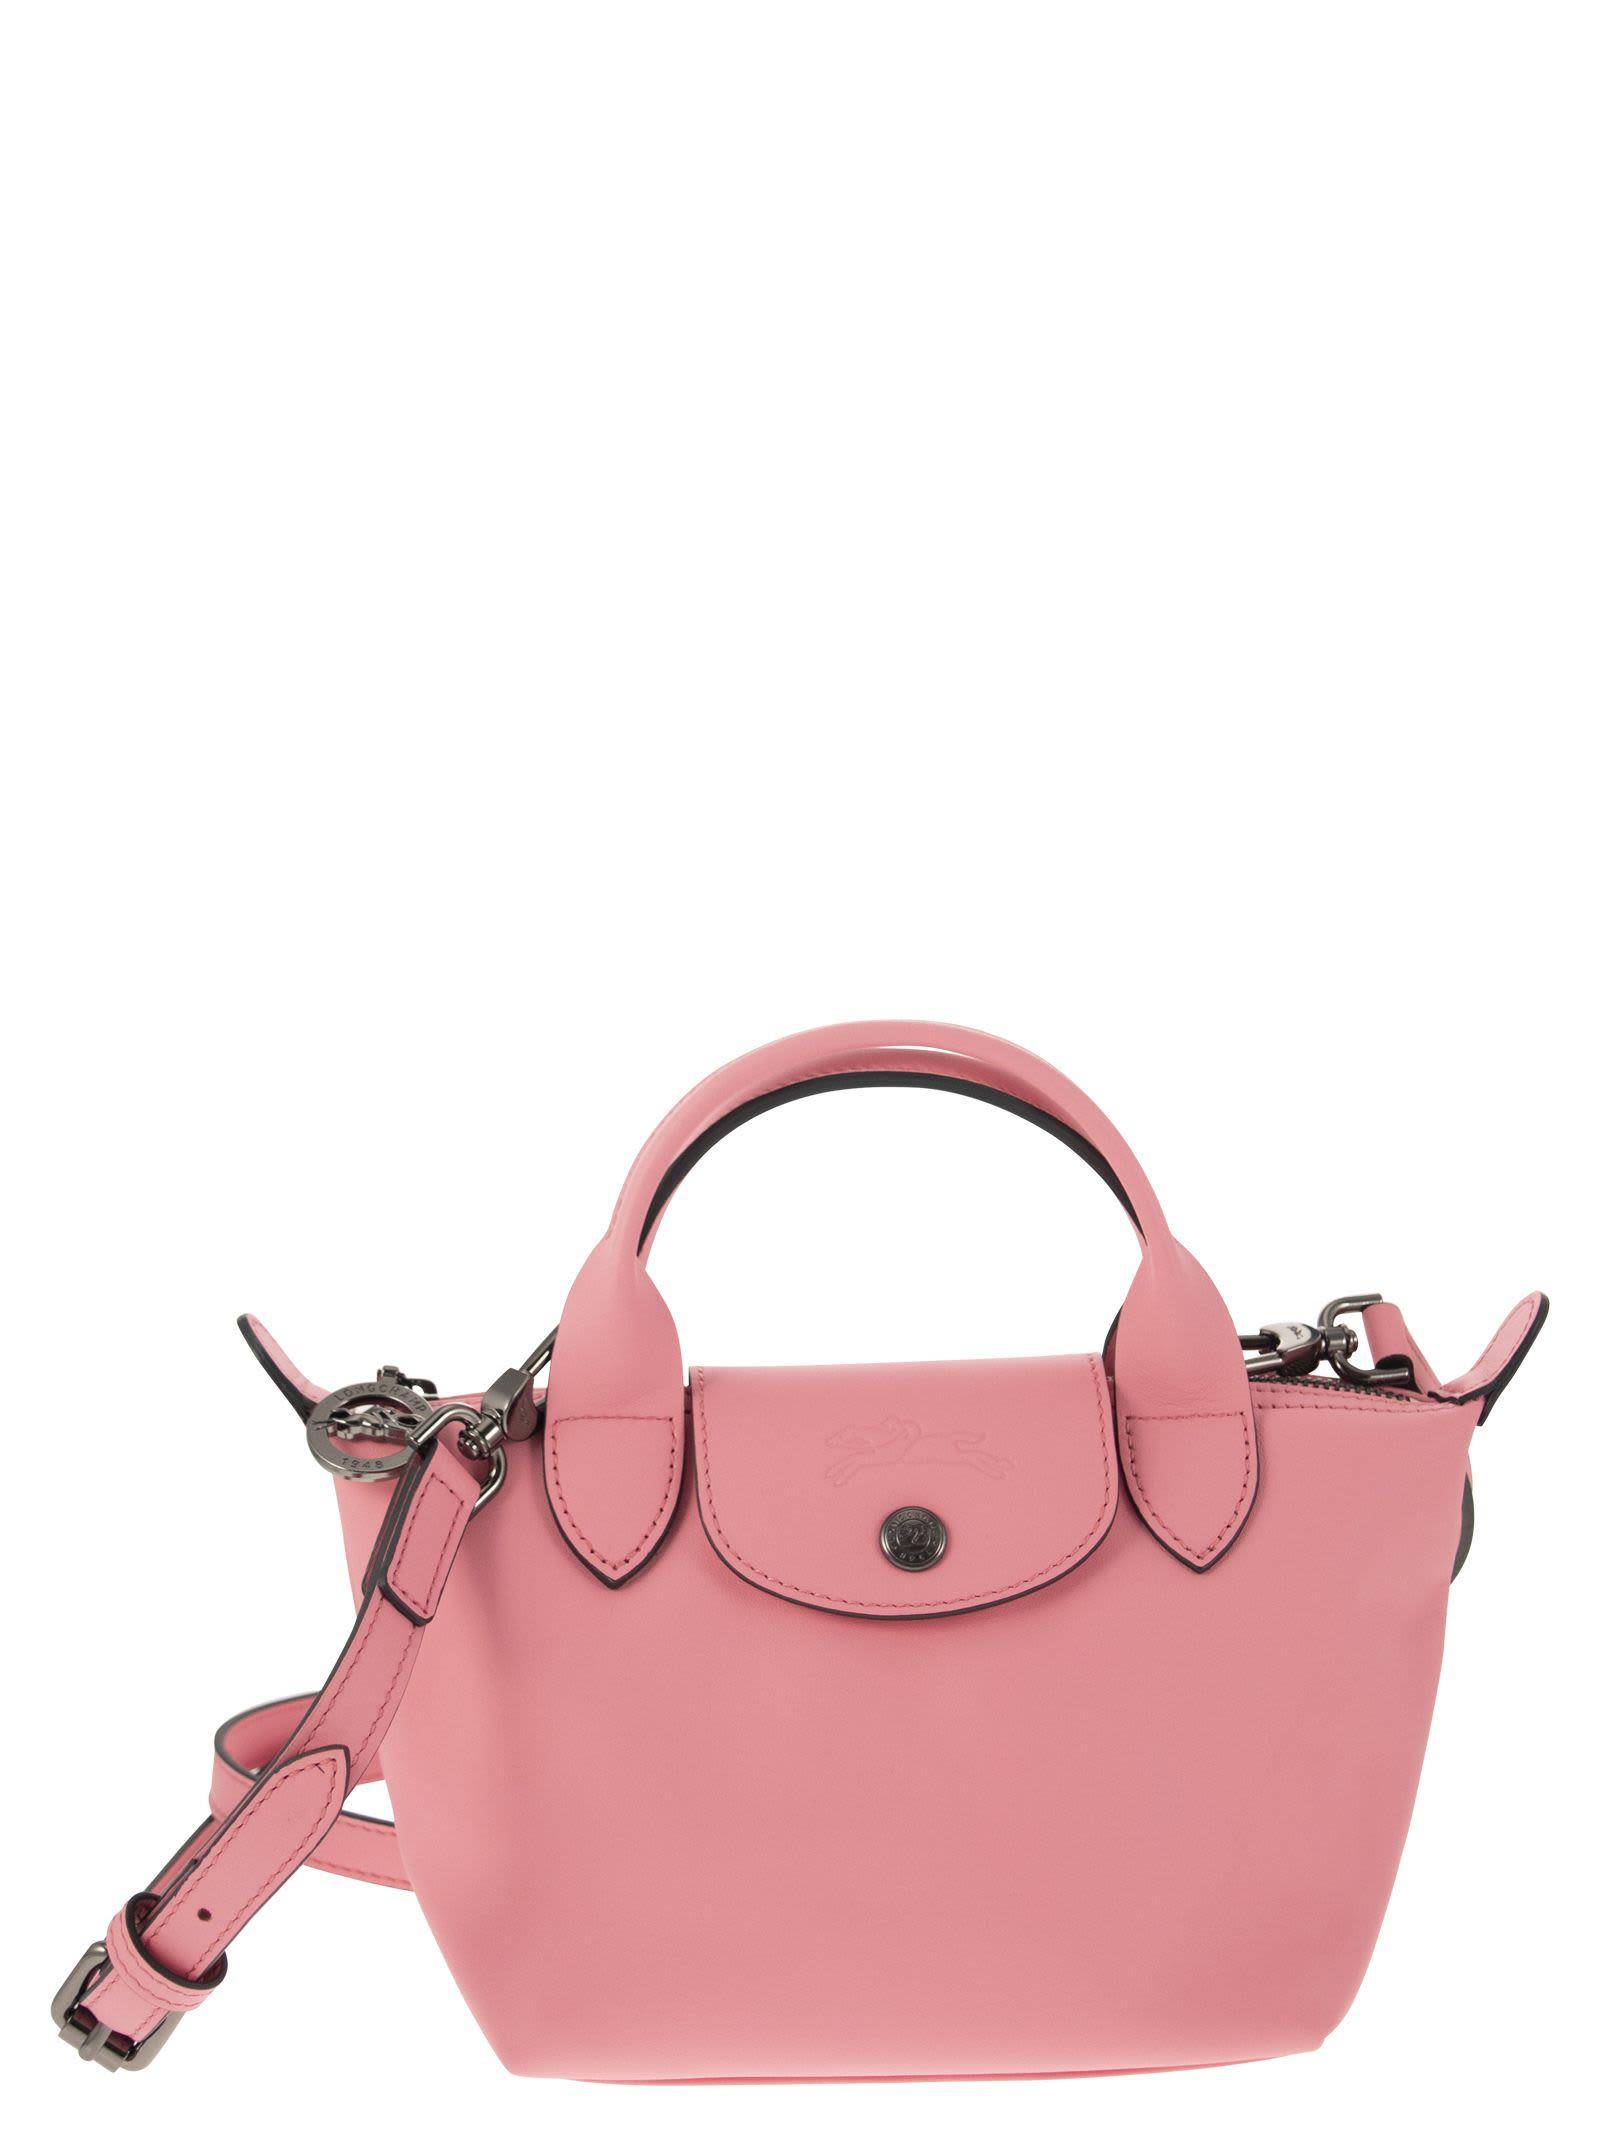 Longchamp - Women's Le Pliage Xtra - Handbag Top Handle Bag - Pink - Leather